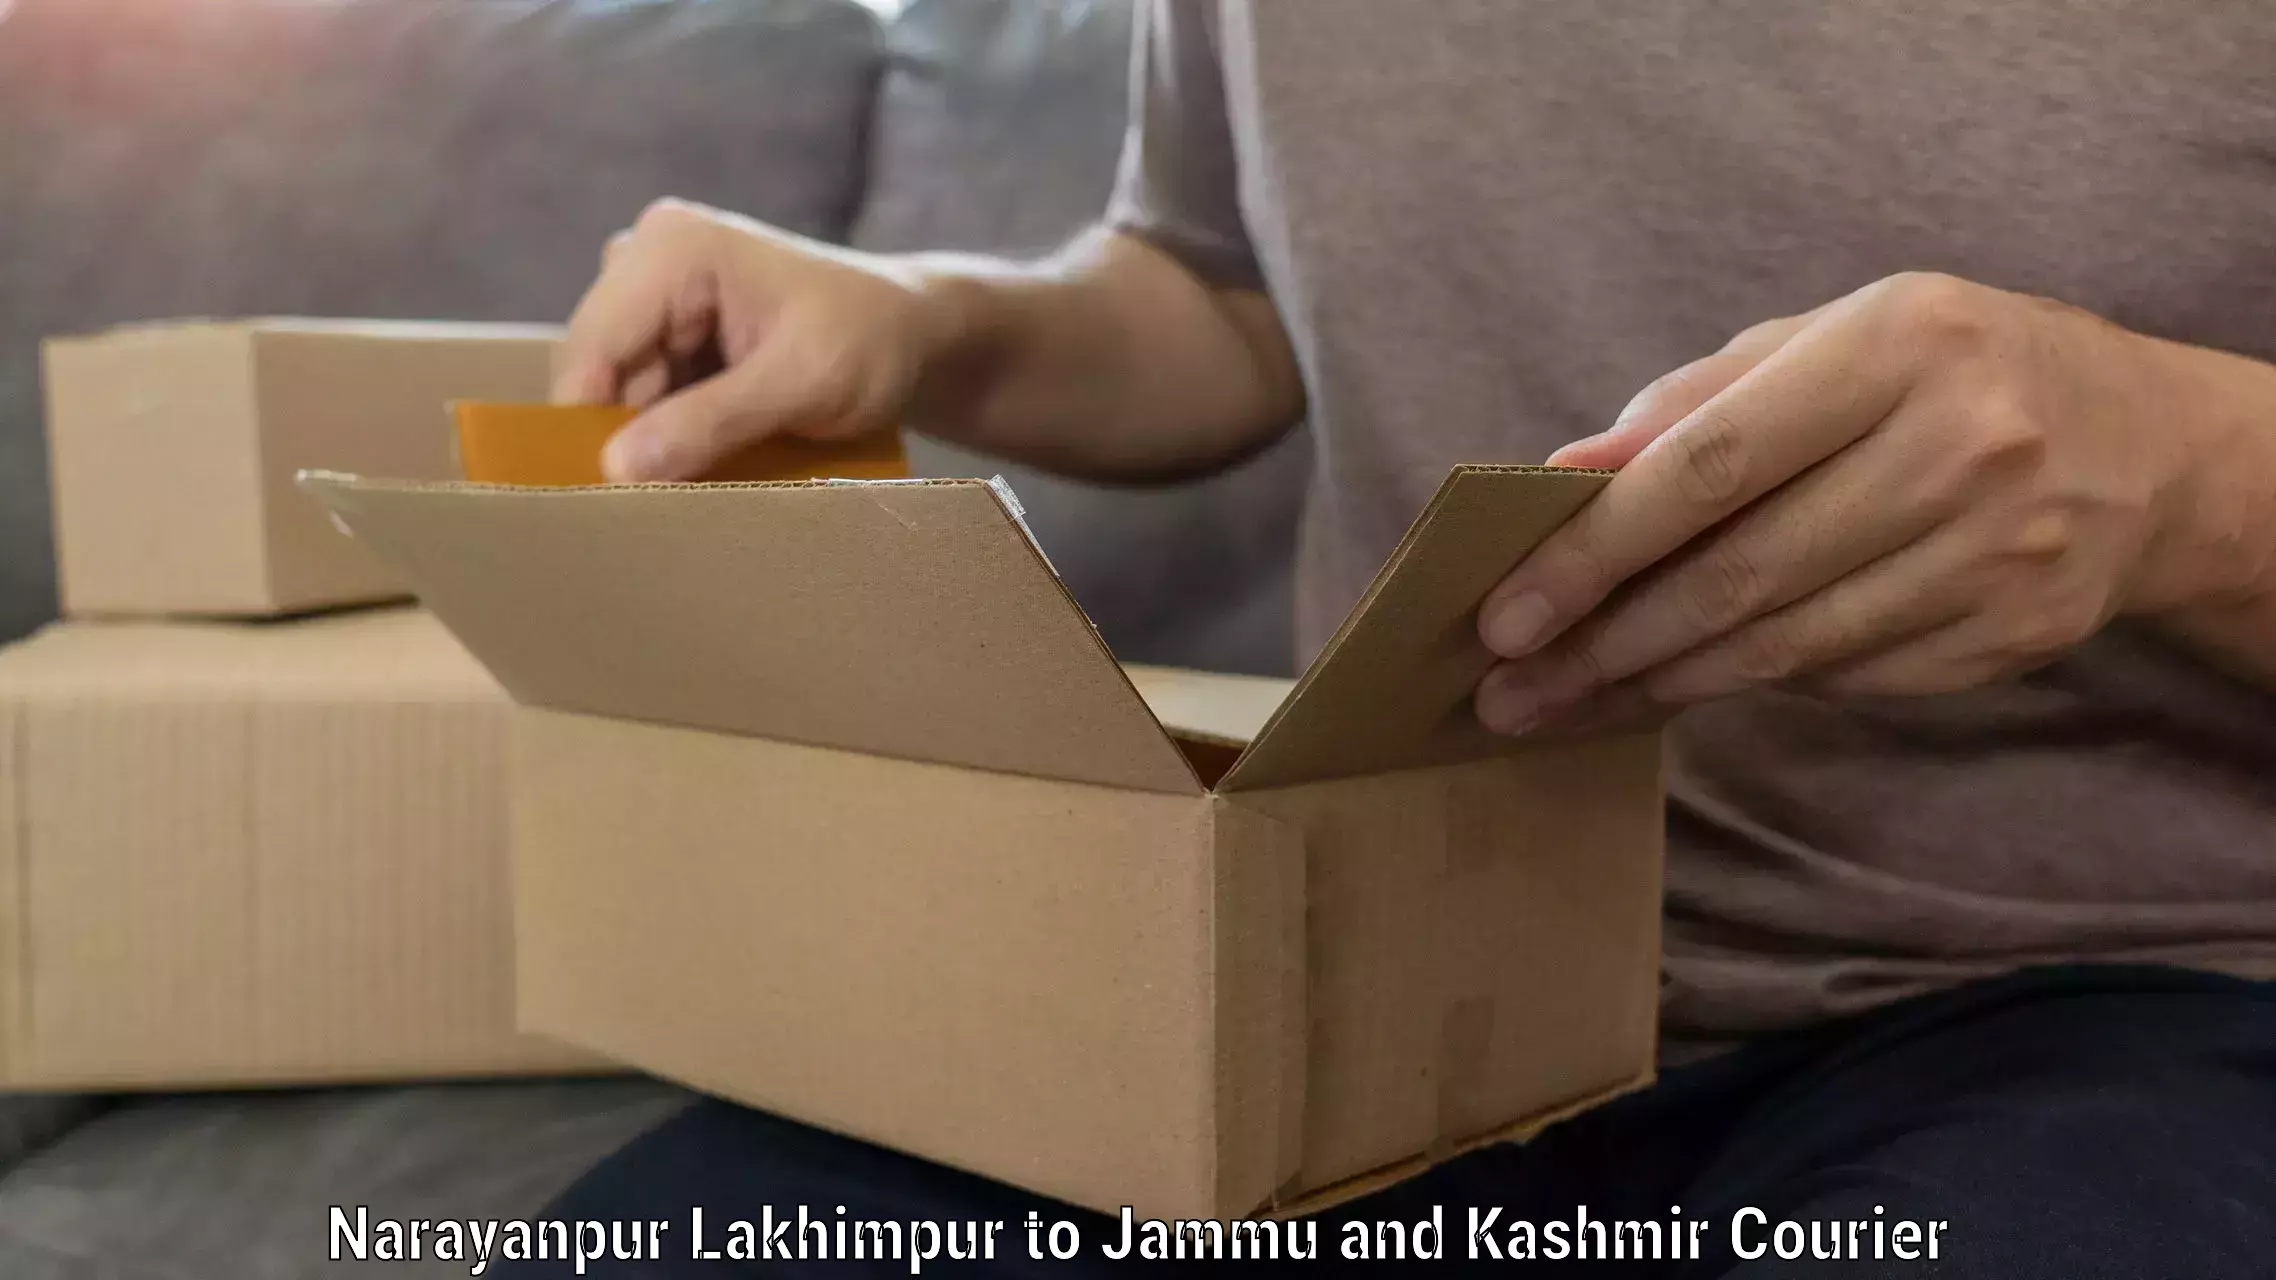 Furniture delivery service Narayanpur Lakhimpur to Srinagar Kashmir